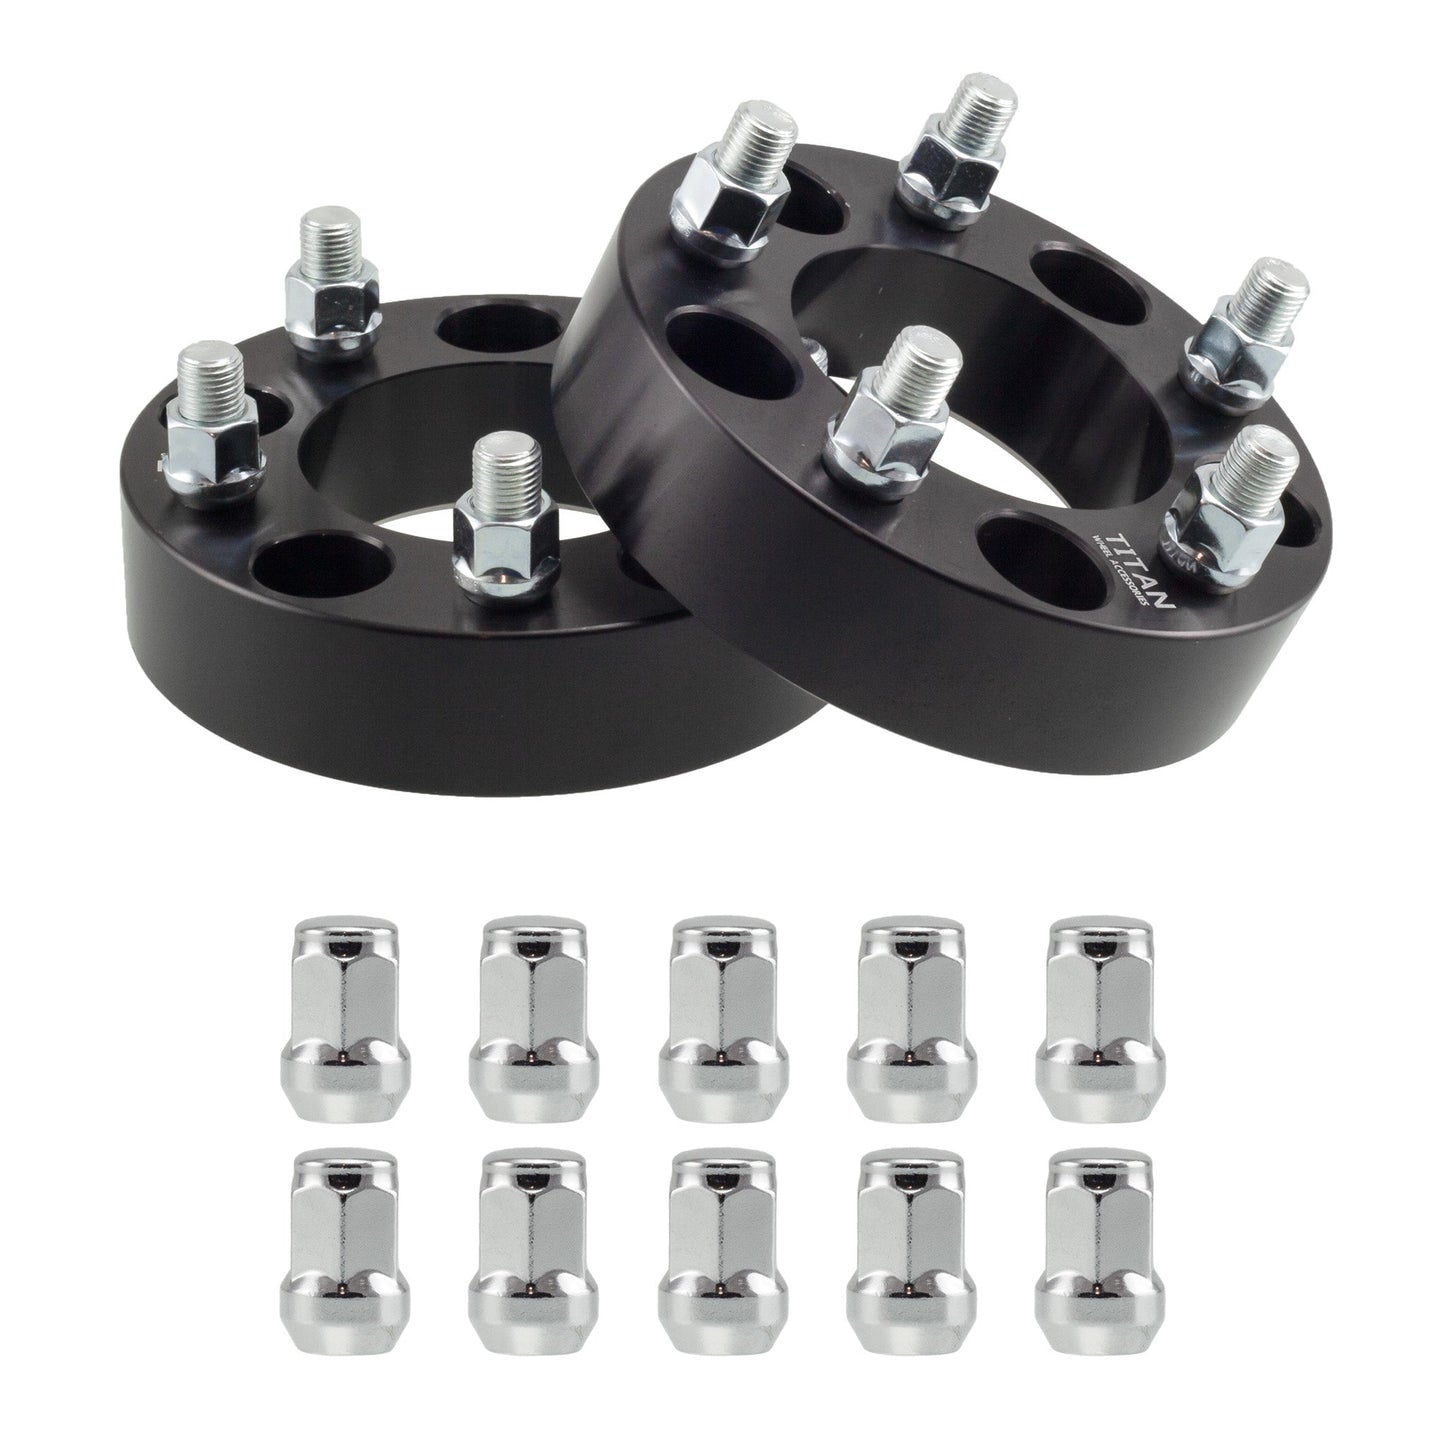 50mm (2") Titan Wheel Spacers for Nissan Altima Maxima 350z 370z Infiniti G35 G37 Q50 | 5x114.3 (5x4.5) | 66.1 Hubcentric |12x1.25 Studs | Titan Wheel Accessories